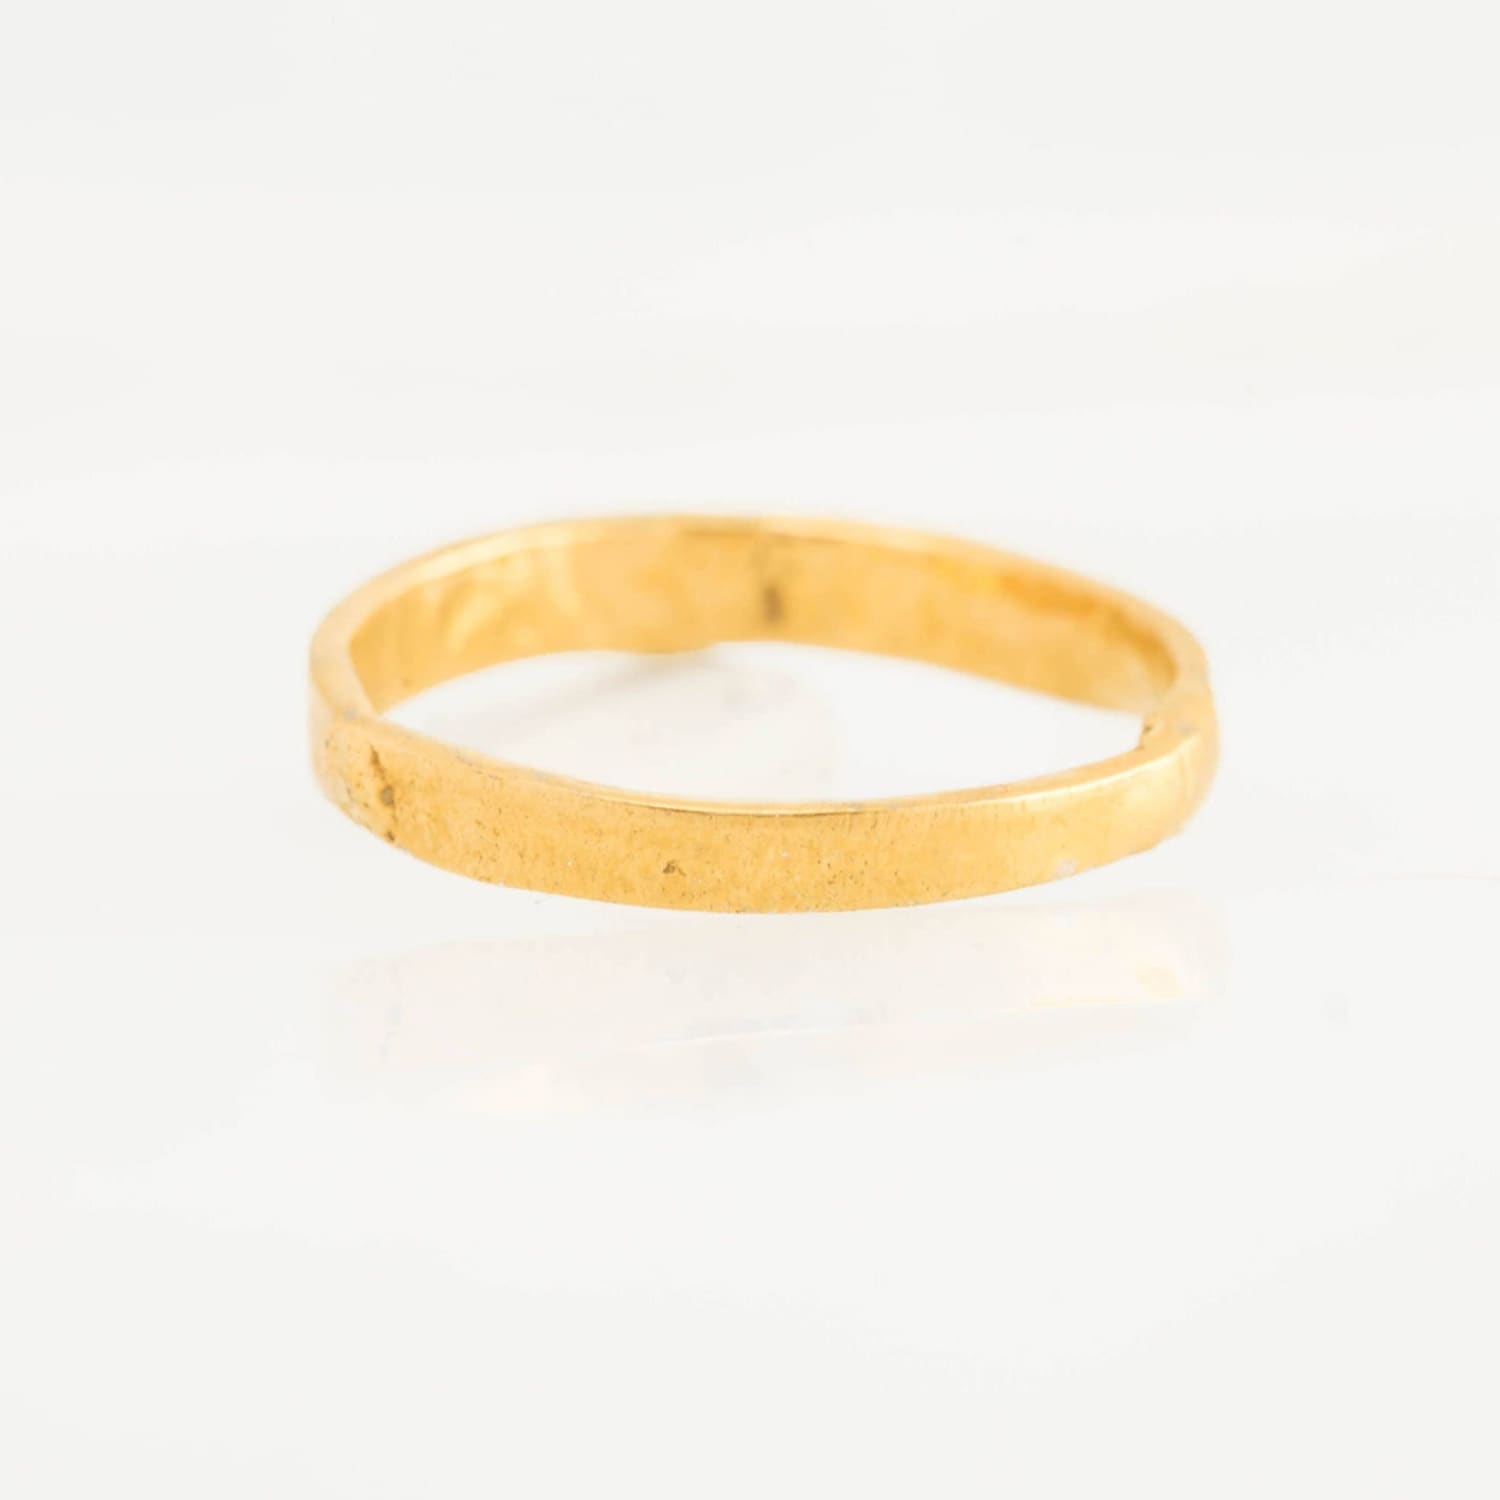 3mm Yellow Gold Textured Band Raw Gemstone Jewelry Rough